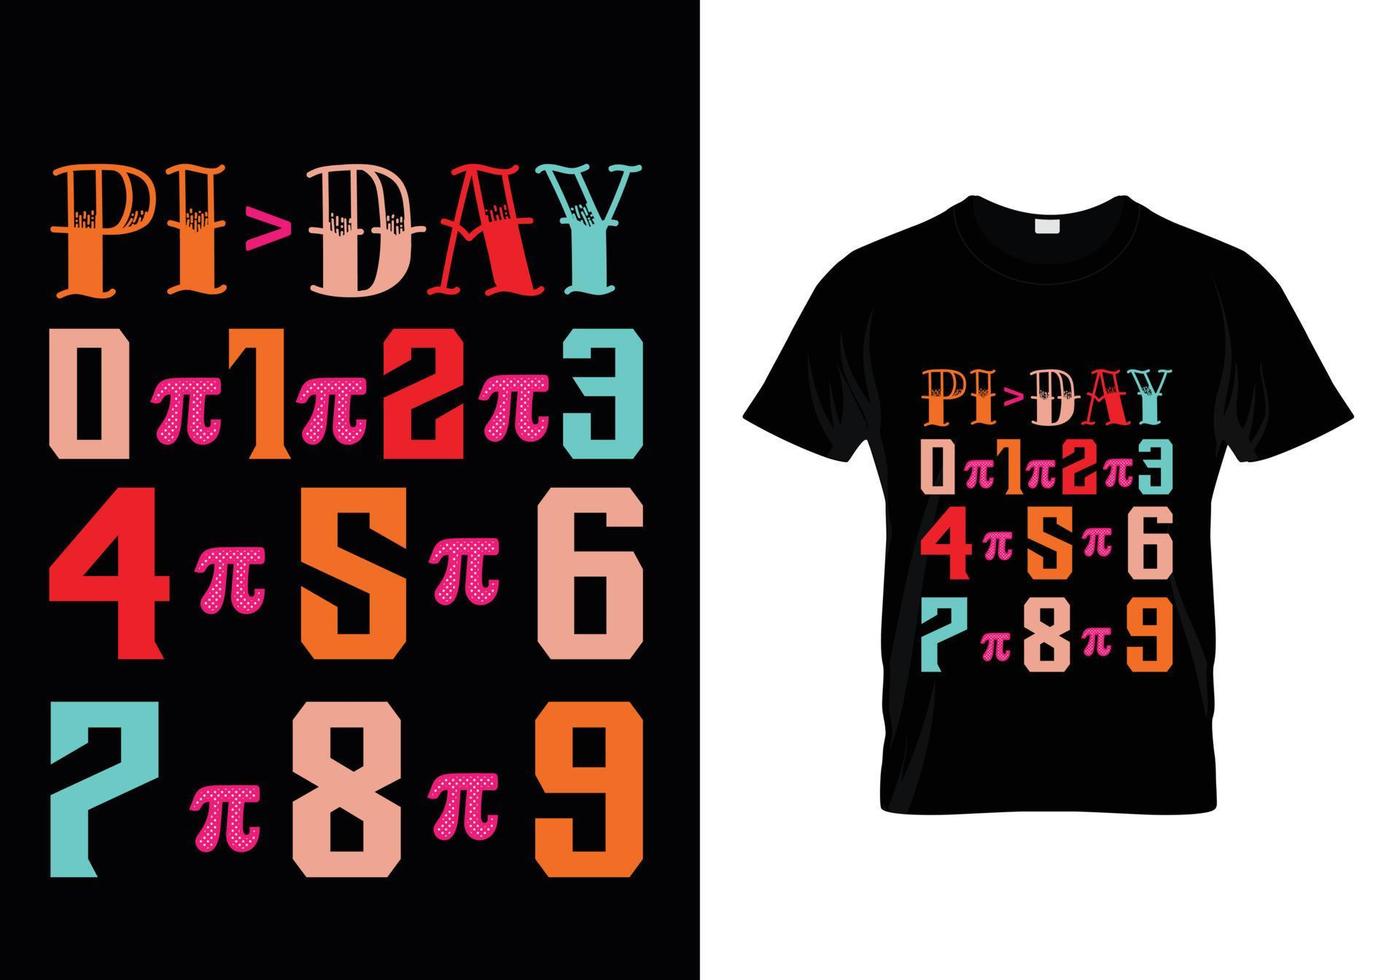 pi dag 0 1 2 3 4 5 6 7 8 9 t-shirt design vektor